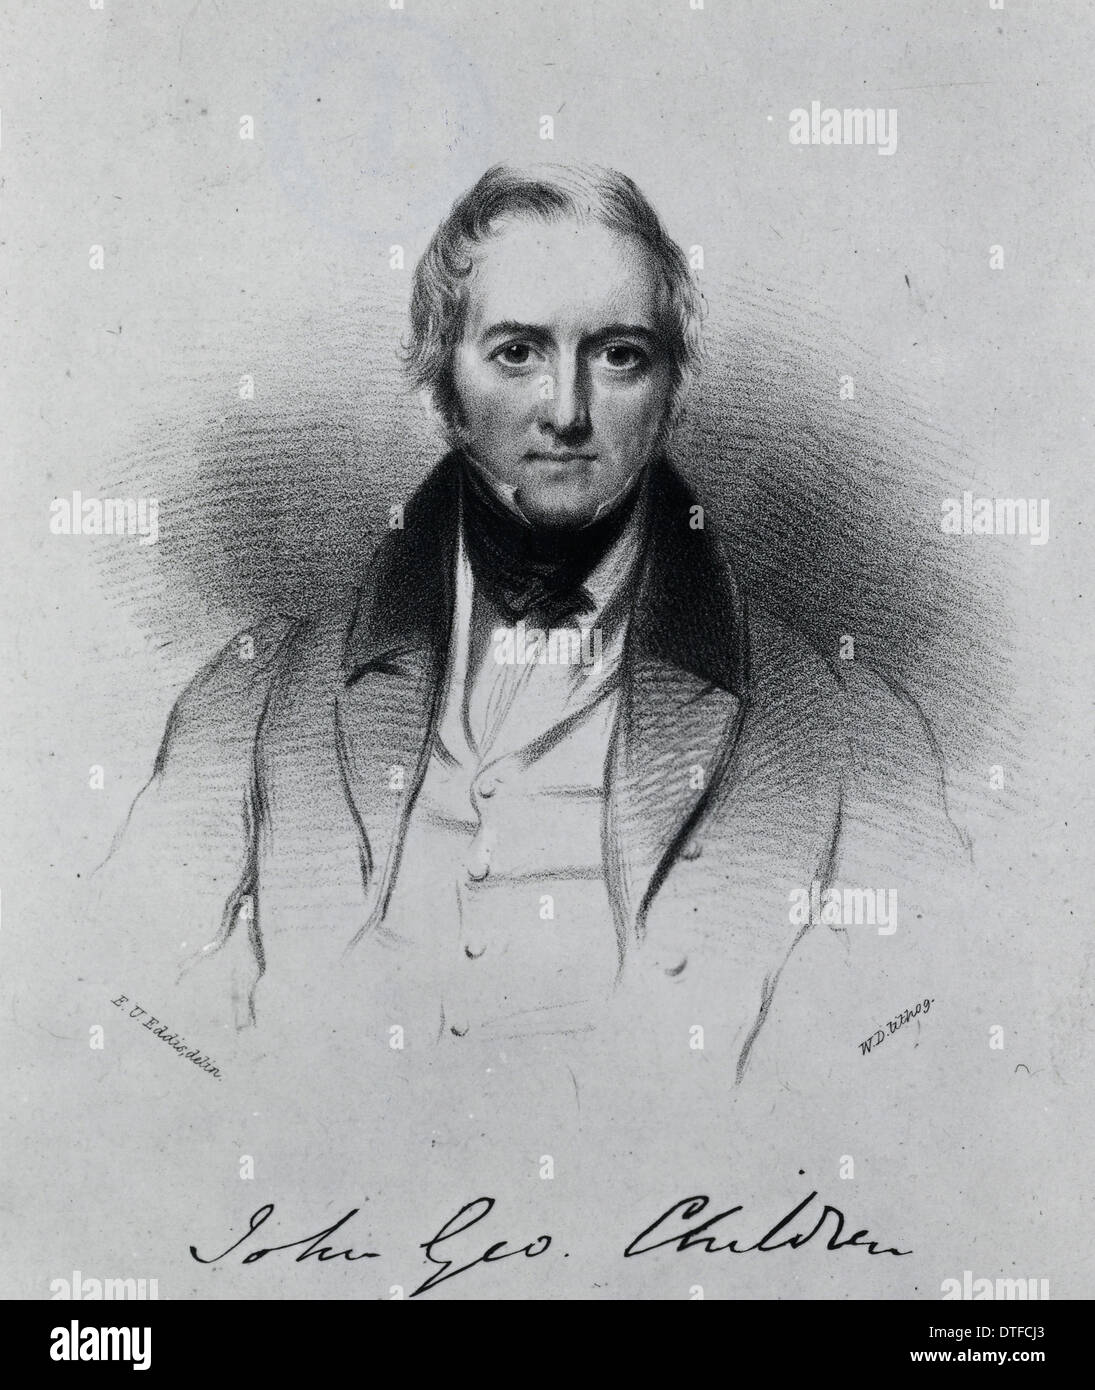 J[C] ohn George Children (1777-1852) Stock Photo